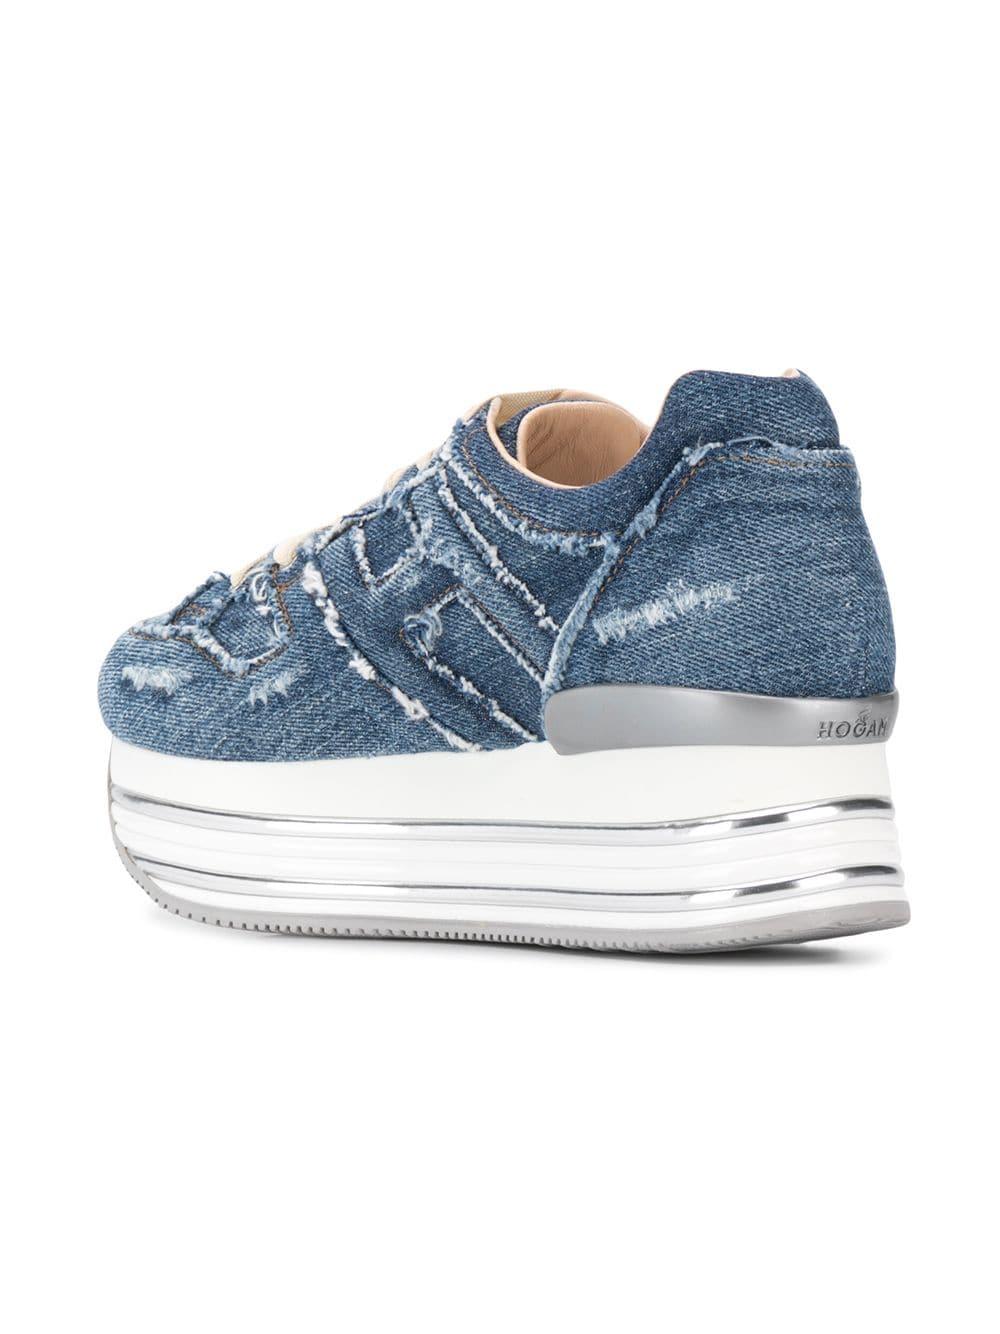 Hogan Denim Platform Sole Sneakers in Blue | Lyst